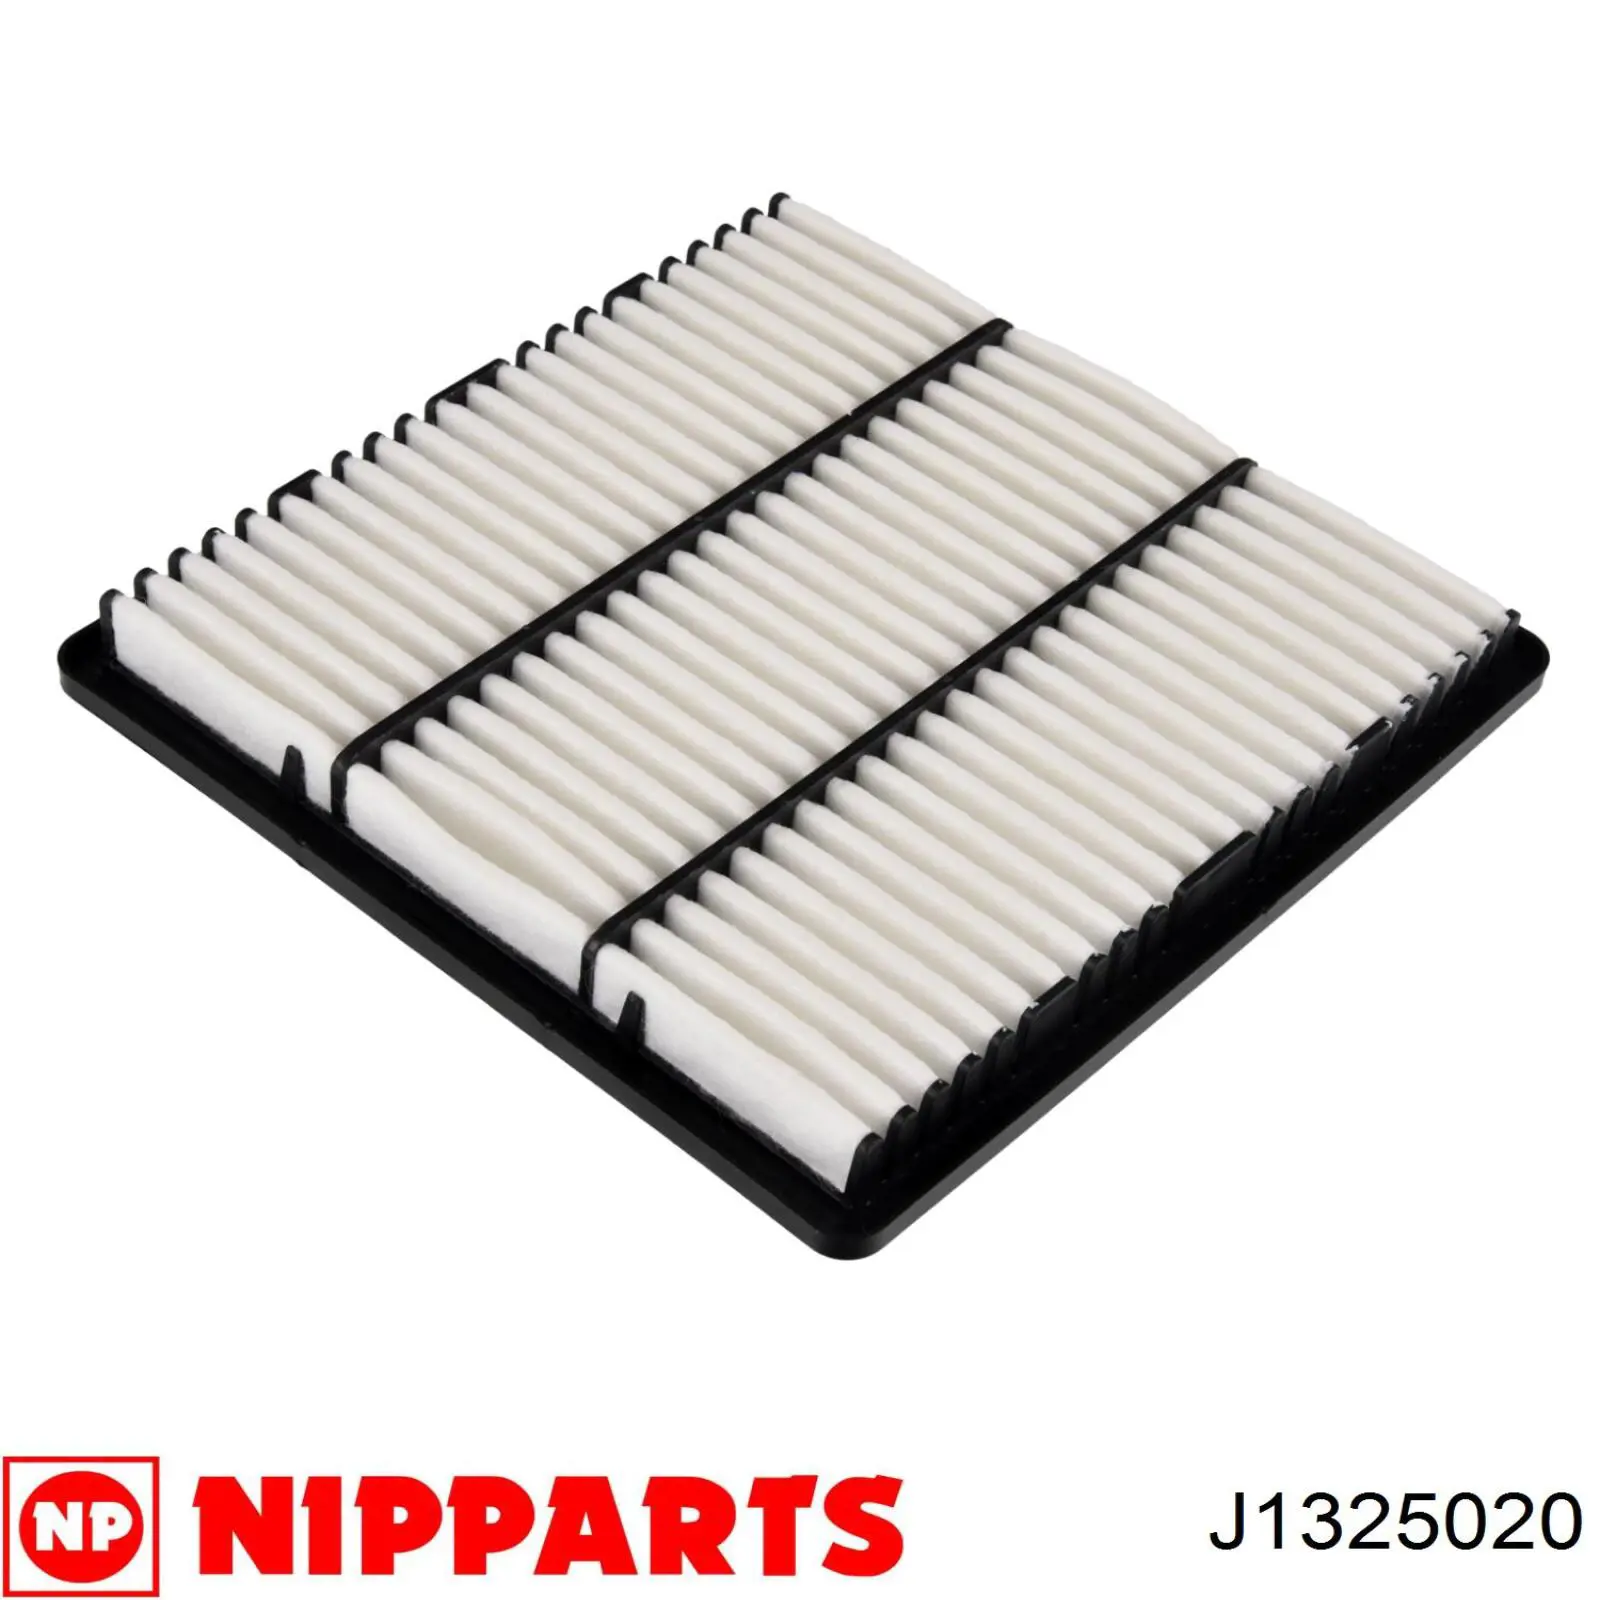 J1325020 Nipparts filtro de aire